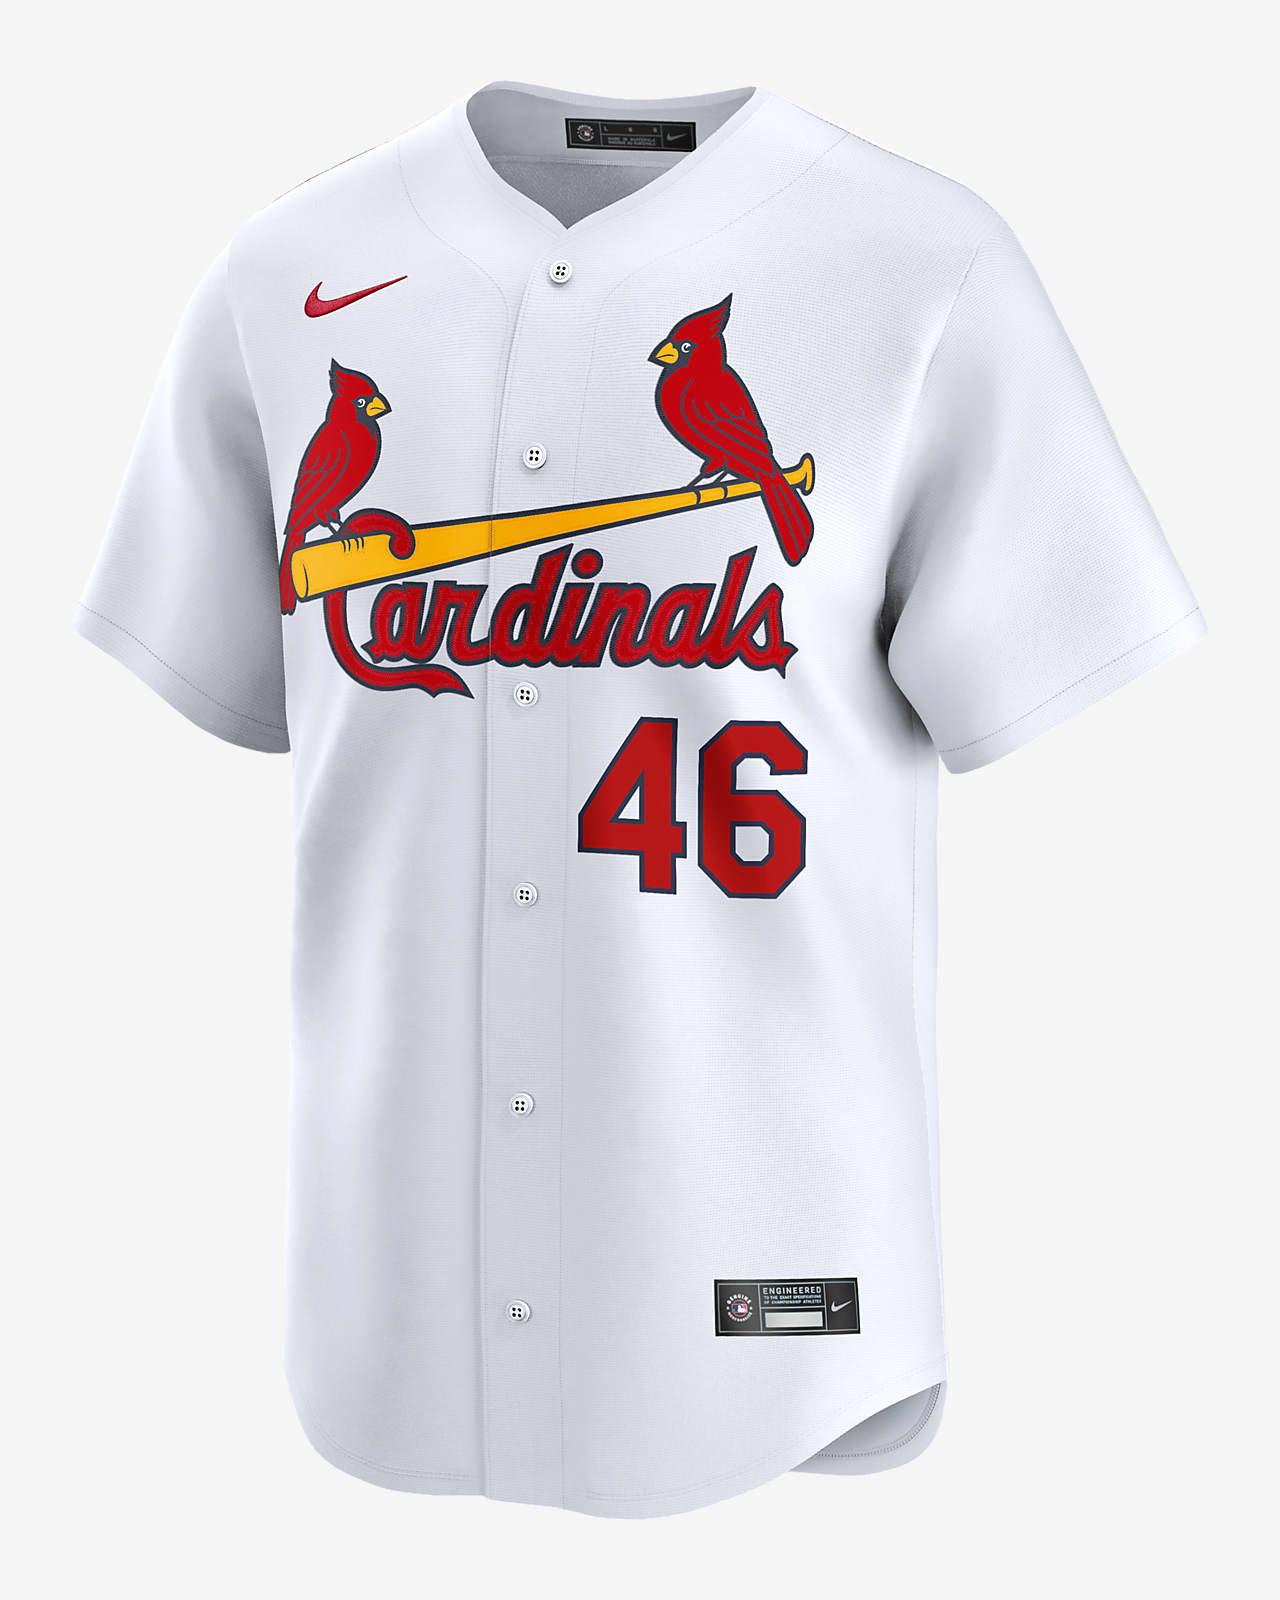 Paul Goldschmidt St. Louis Cardinals Men's Nike Dri-FIT ADV MLB Limited Jersey